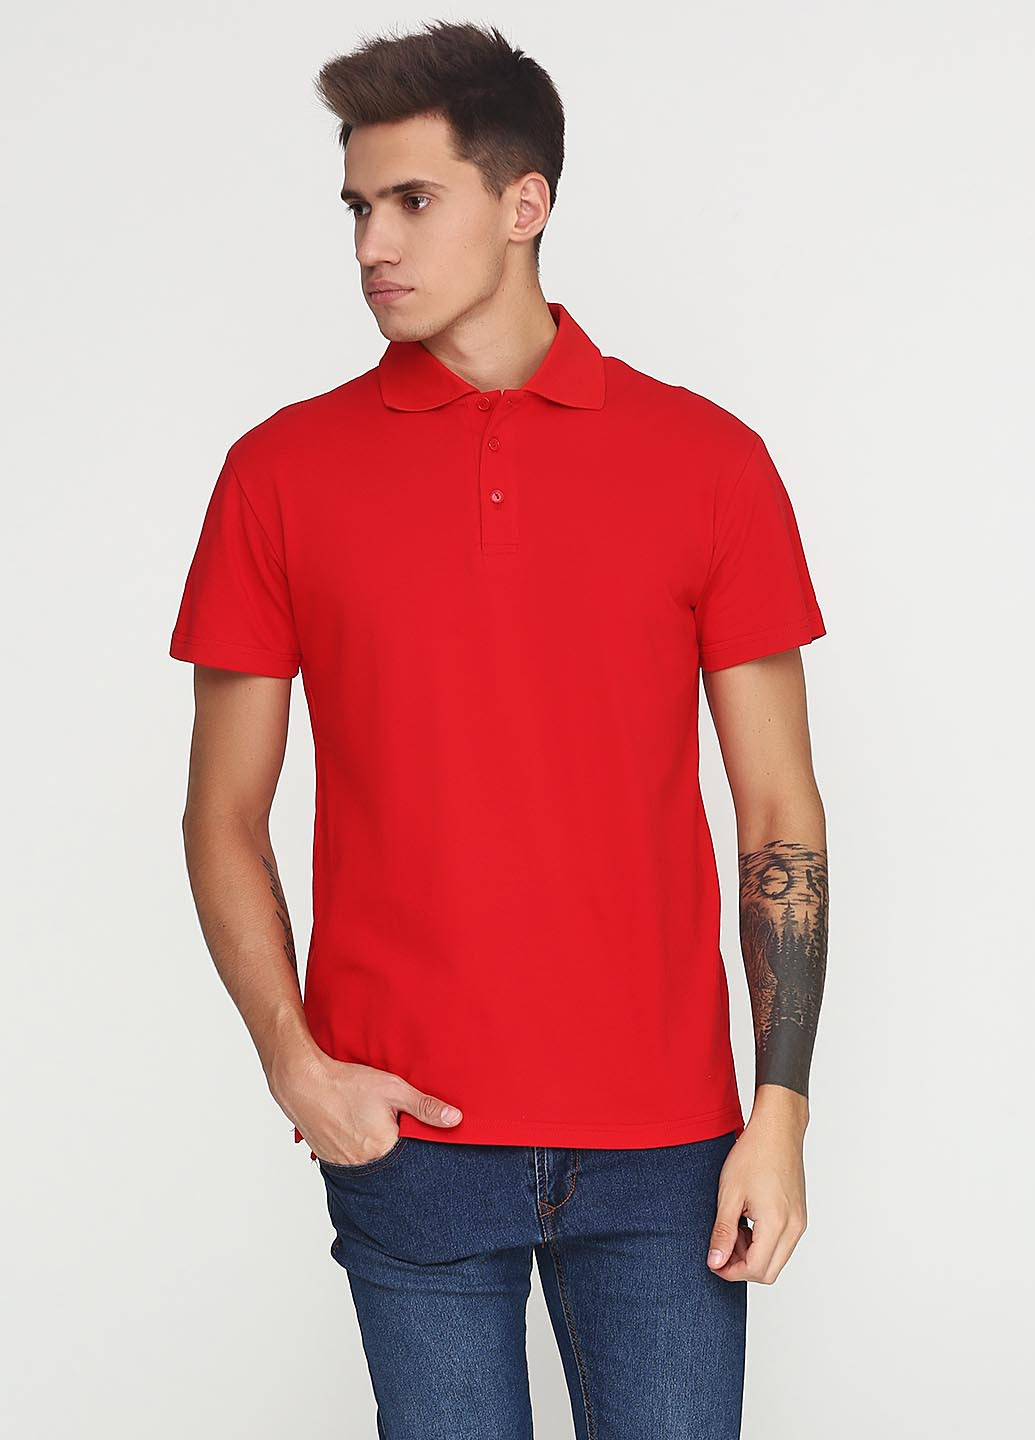 Красная футболка-поло для мужчин Tryapos однотонная